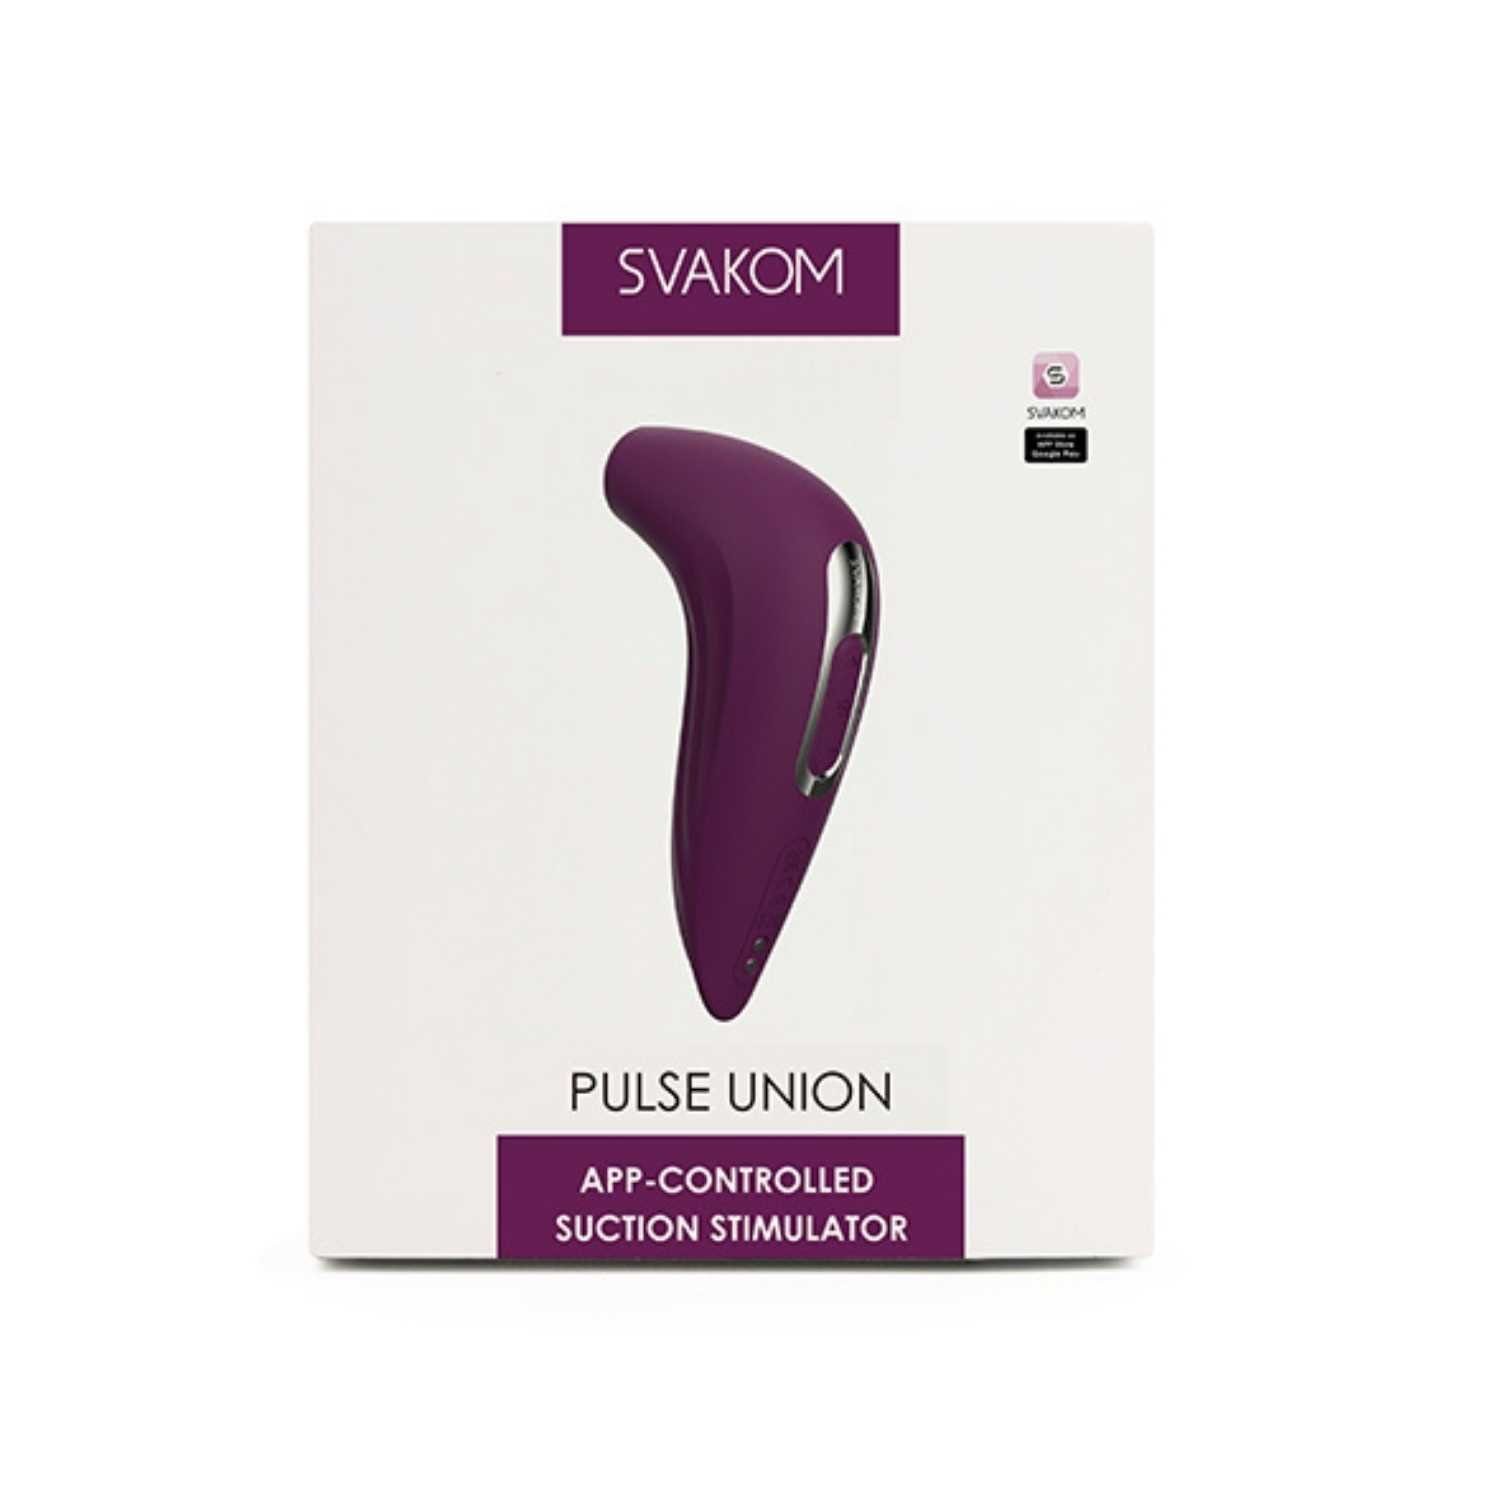 Luftdruck-Vibrator Klitoris-Stimulator Pulse Intensitäten Svakom Union violett, - 5 Svakom